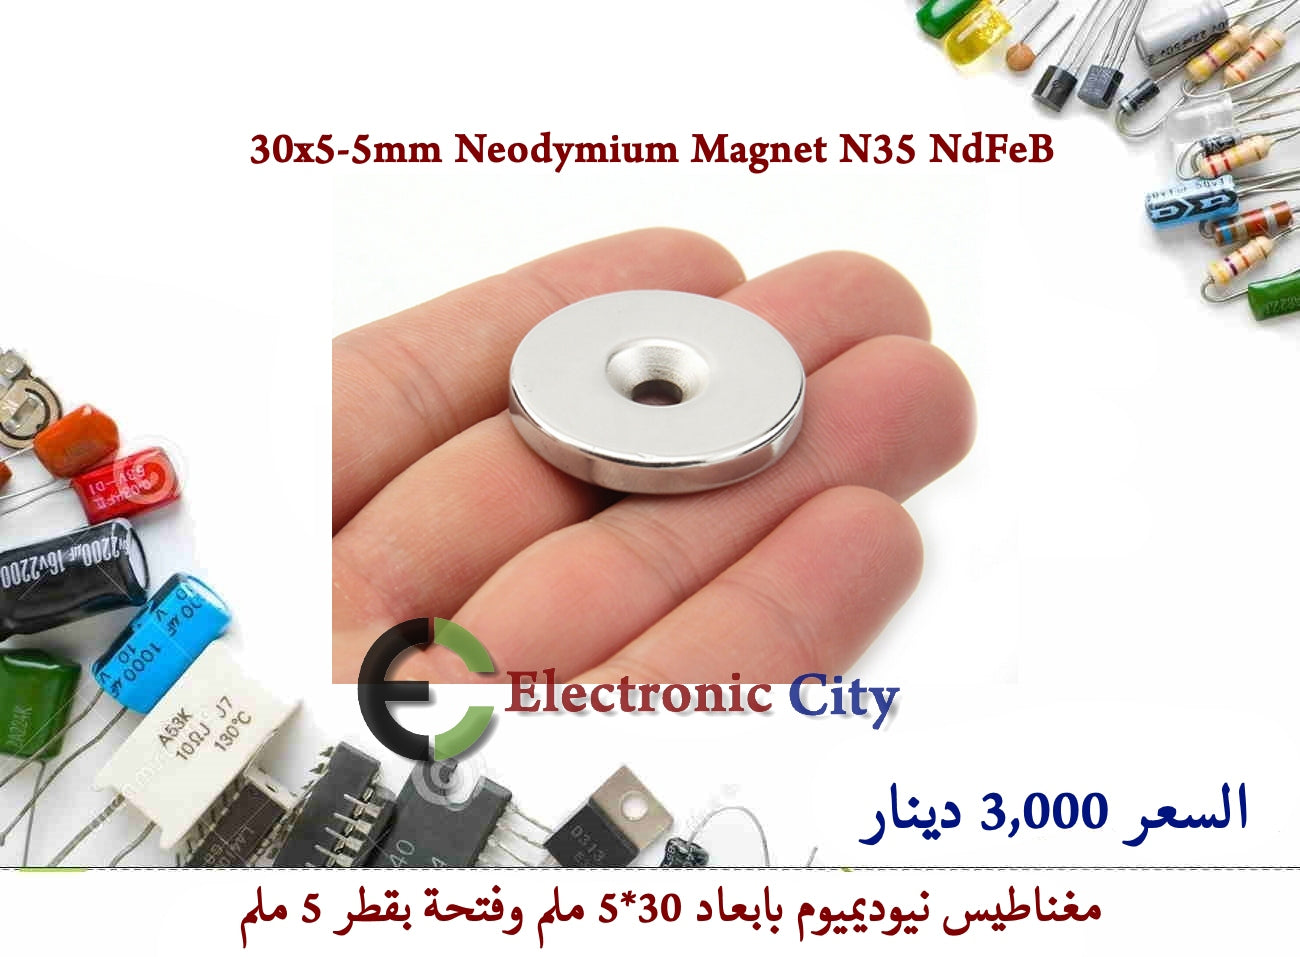 30x5-5mm Neodymium Magnet N35 NdFeB